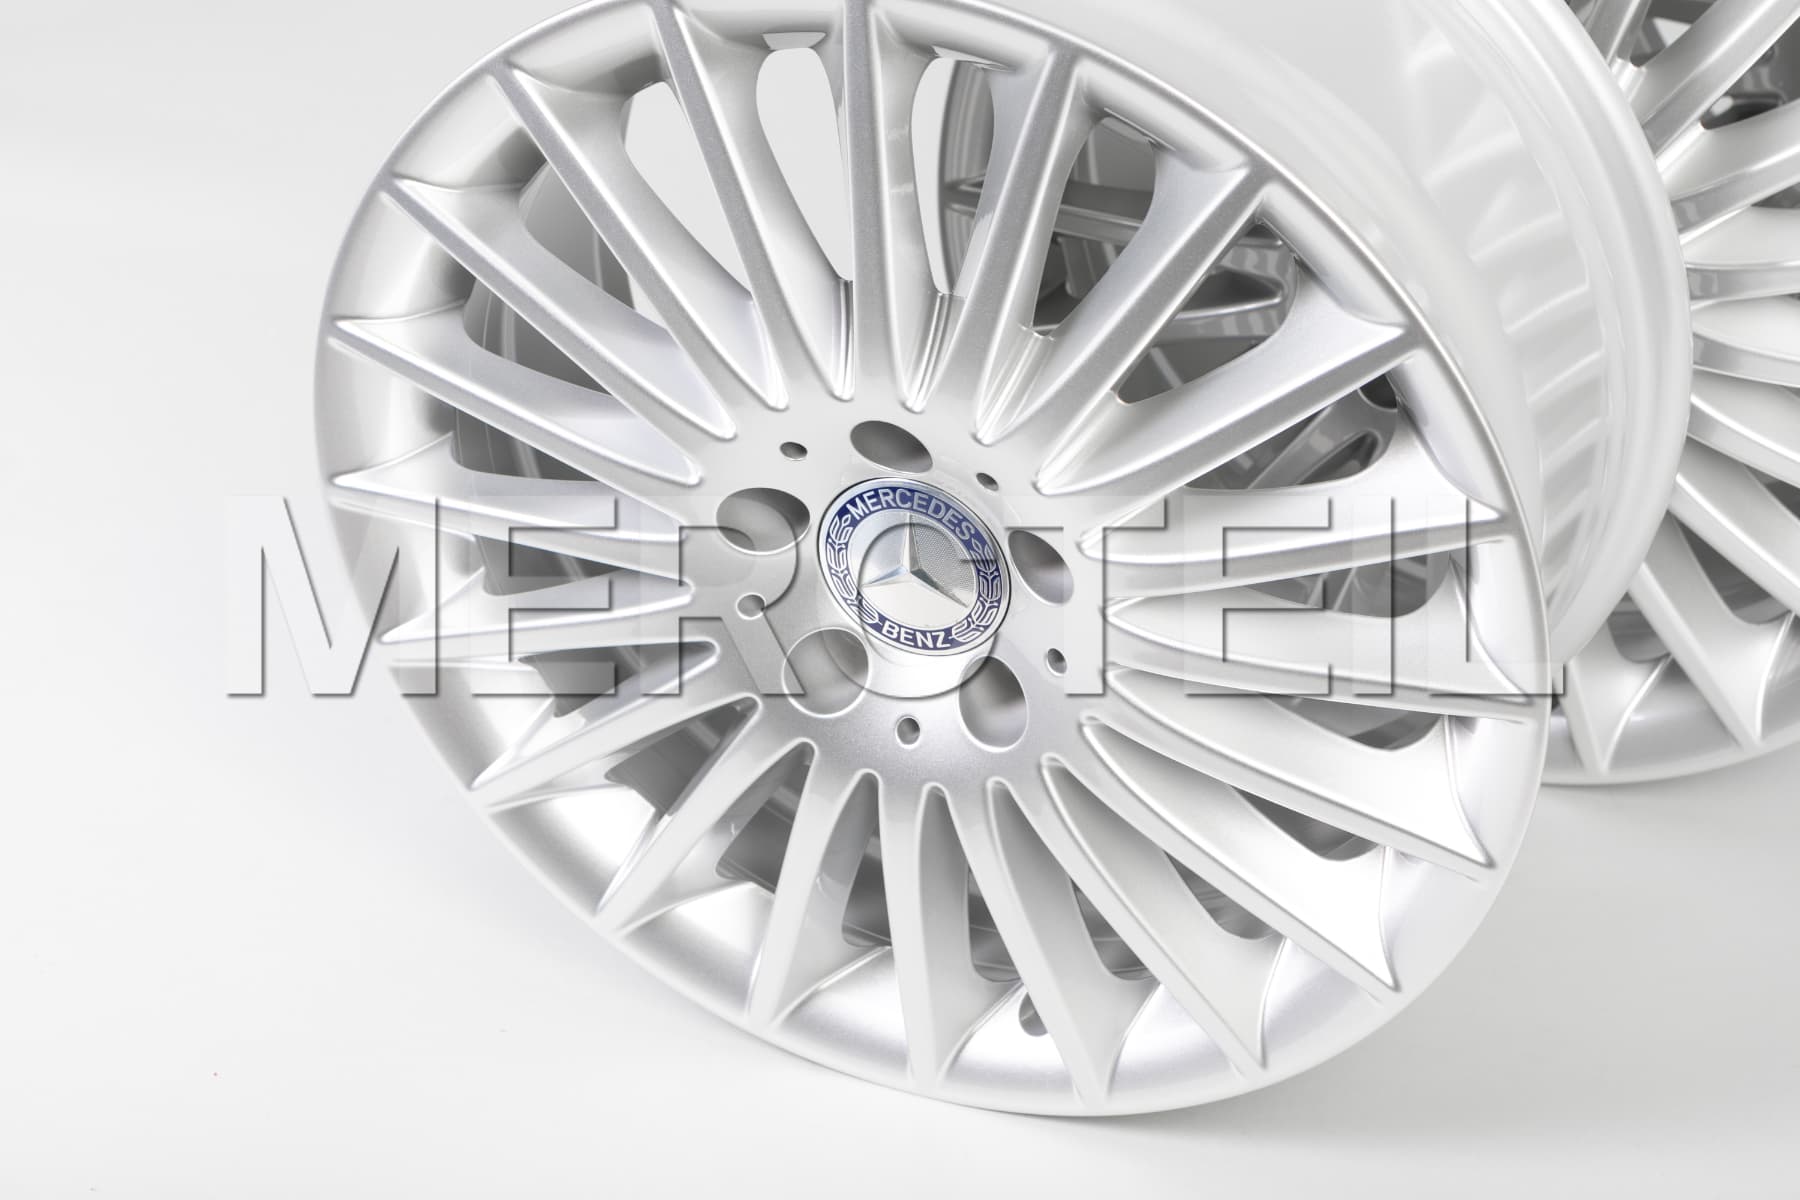 Multispoke Silver Vanadium Wheel Set 17 Inch E-Class W/S212 Genuine Mercedes-Benz A21240154027X45